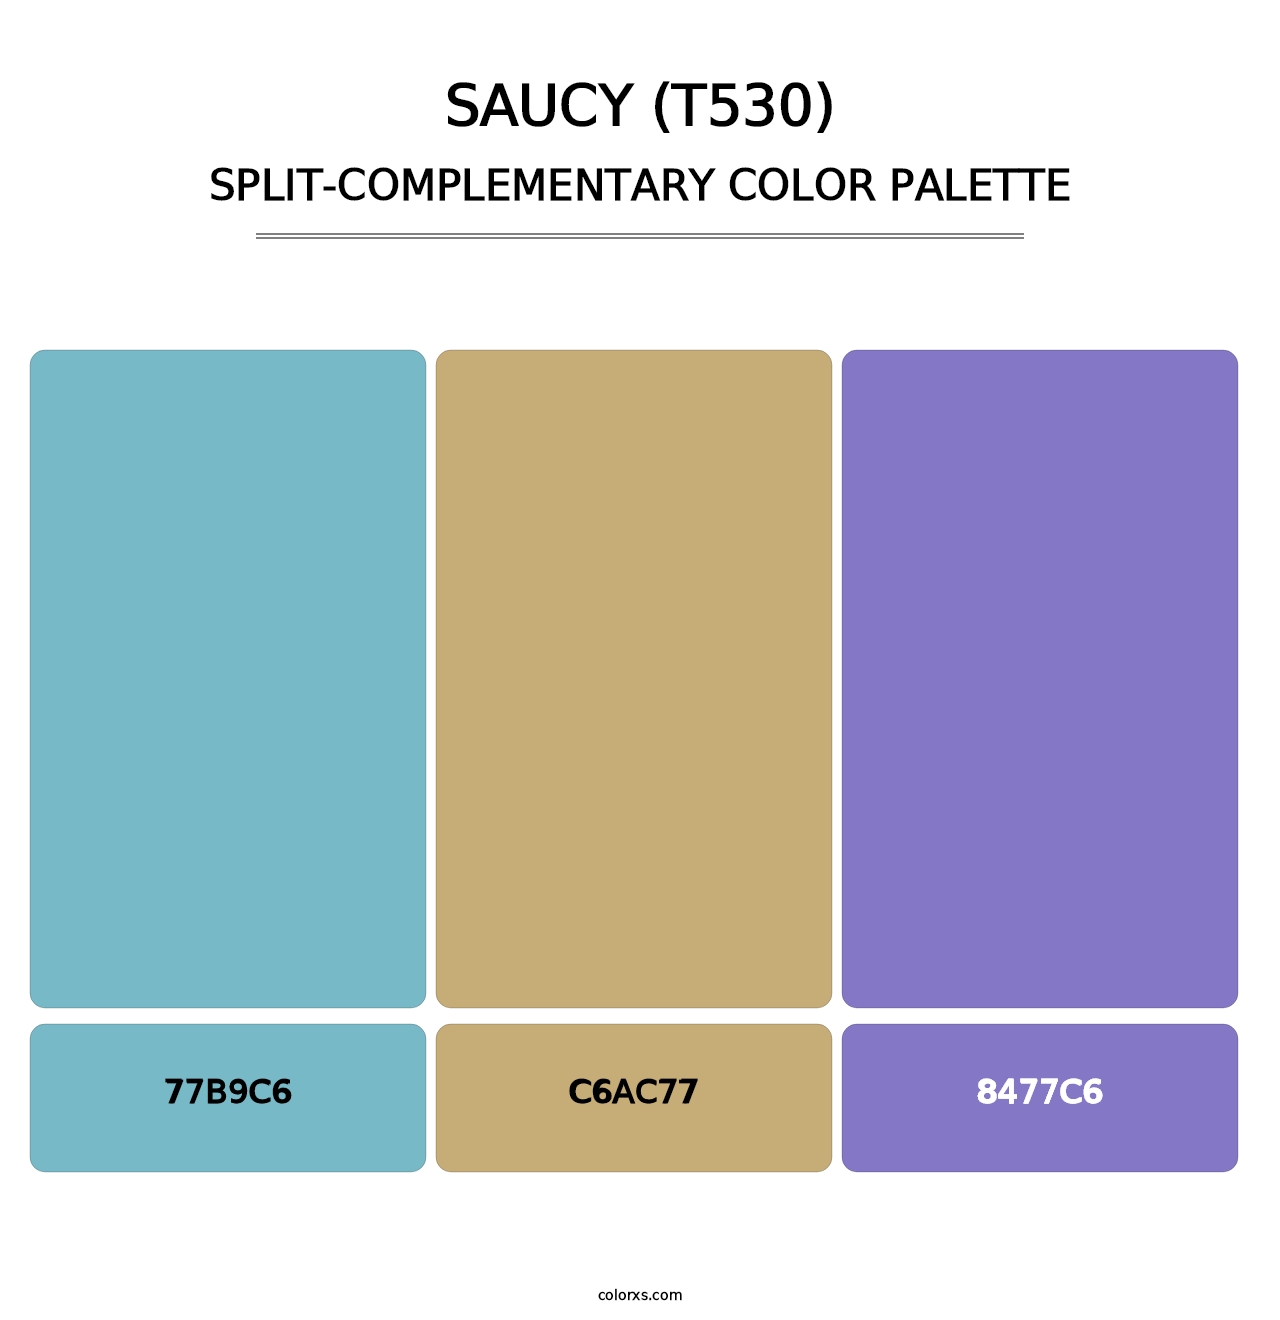 Saucy (T530) - Split-Complementary Color Palette